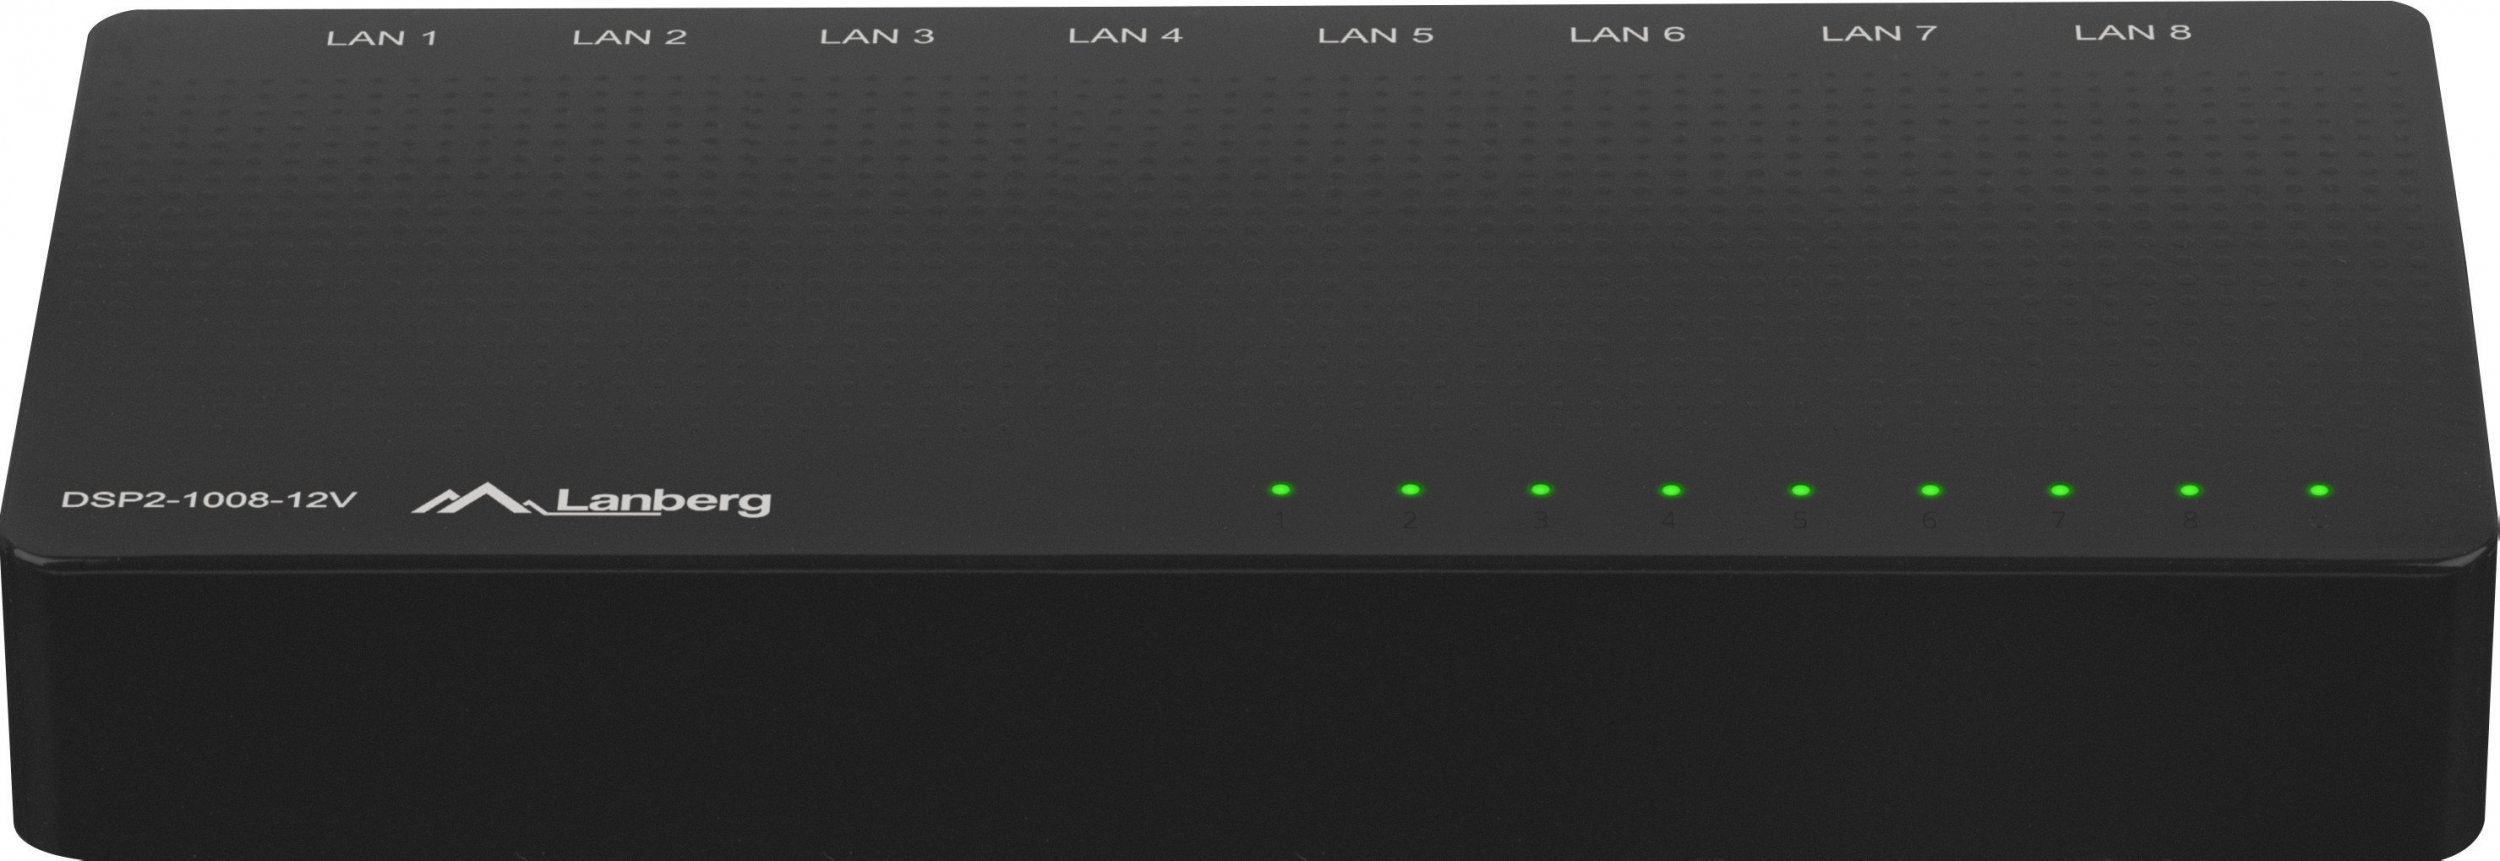 Switch-uri cu management - Switch Gigabit Lanberg 42417, cu 8 porturi Gigabit Ethernet RJ-45 10/100/1000 Mbps, 12V, racire pasiva, negru